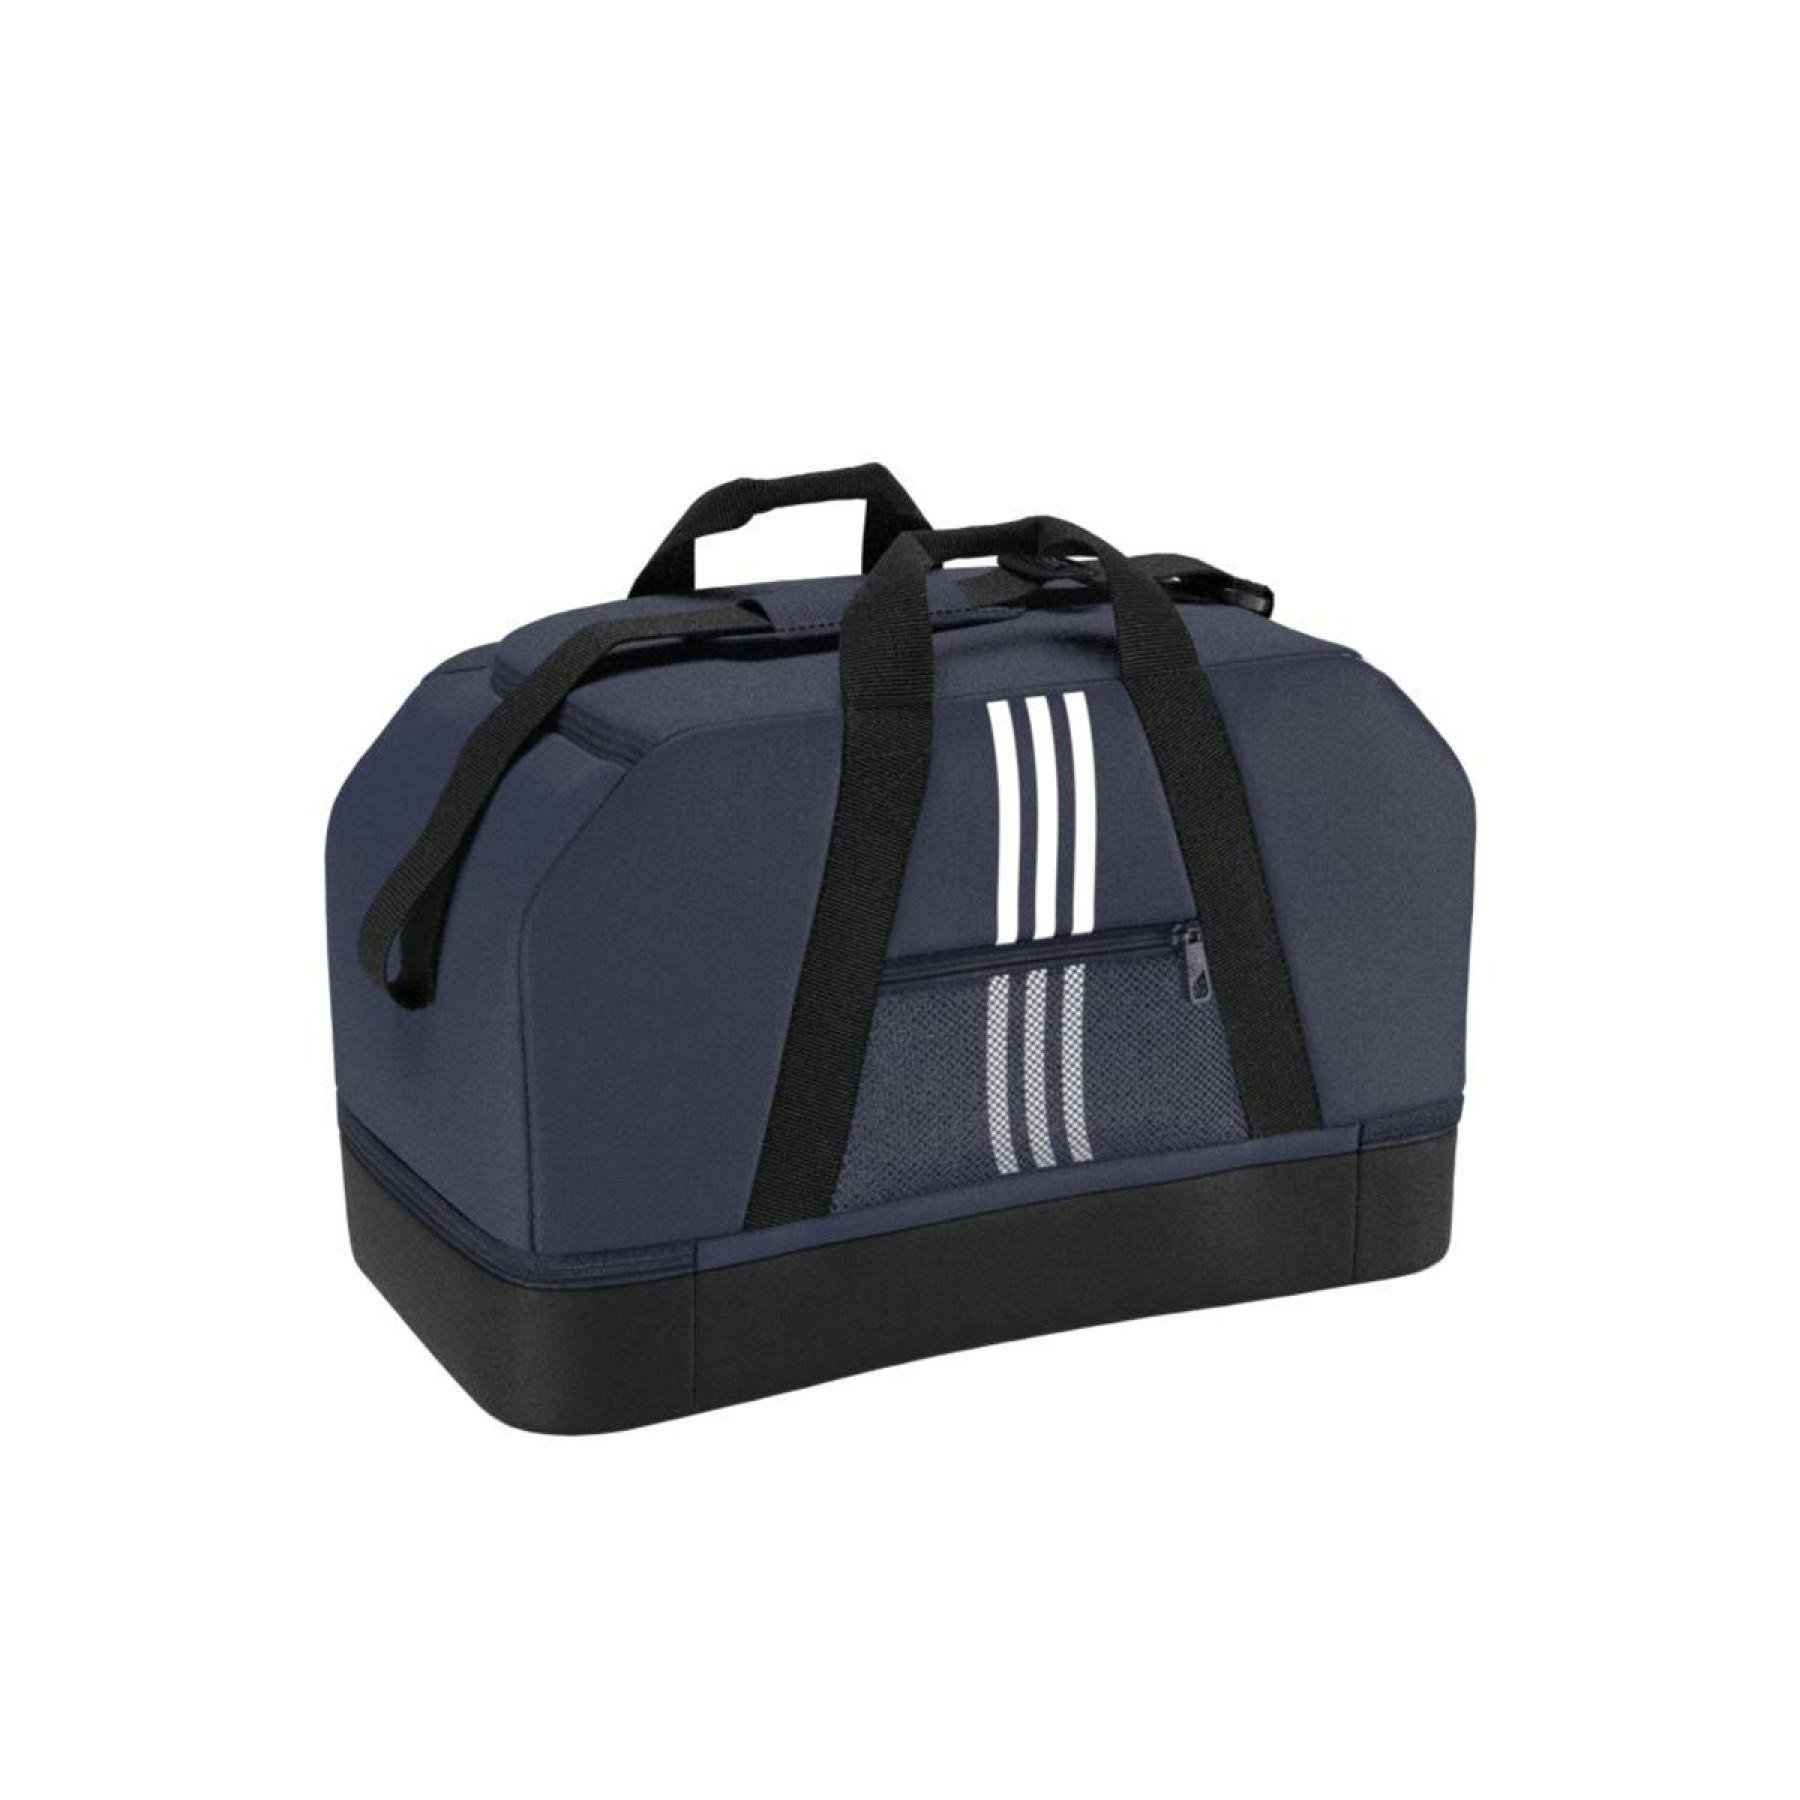 Sports bag adidas Tiro Primegreen Bottom Compartment Small